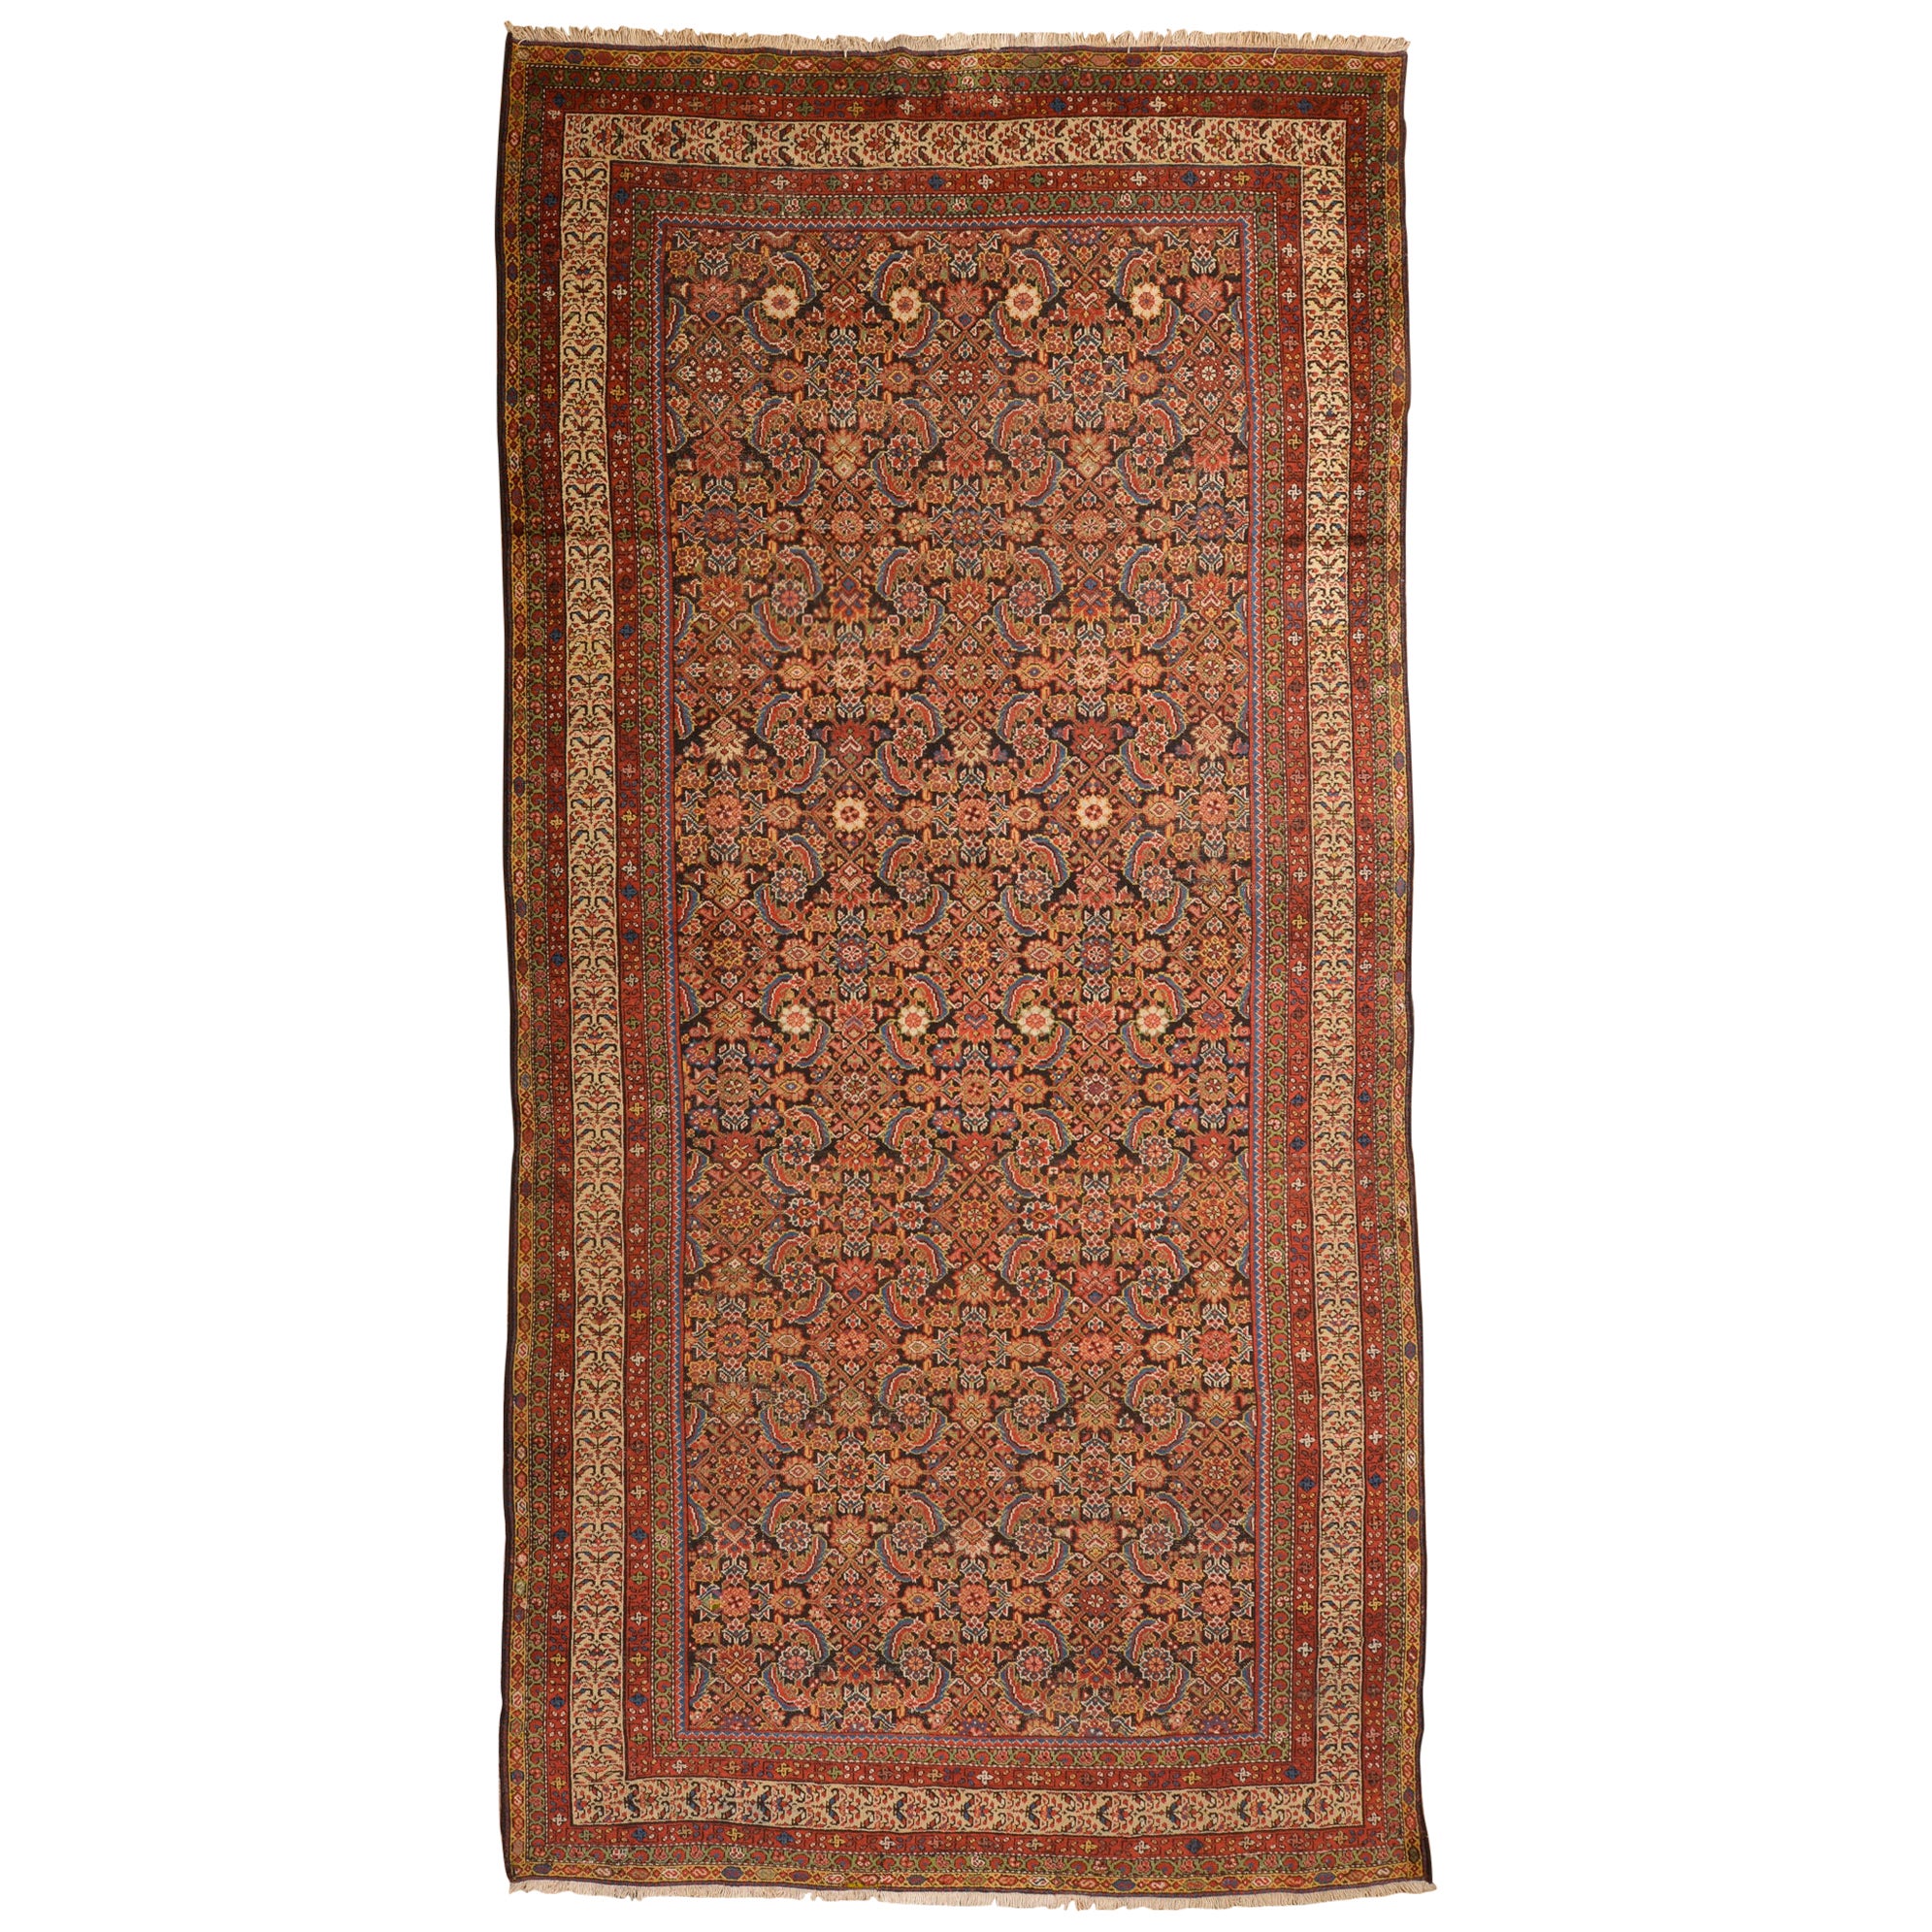 Antique Long GAREBAGH Carpet